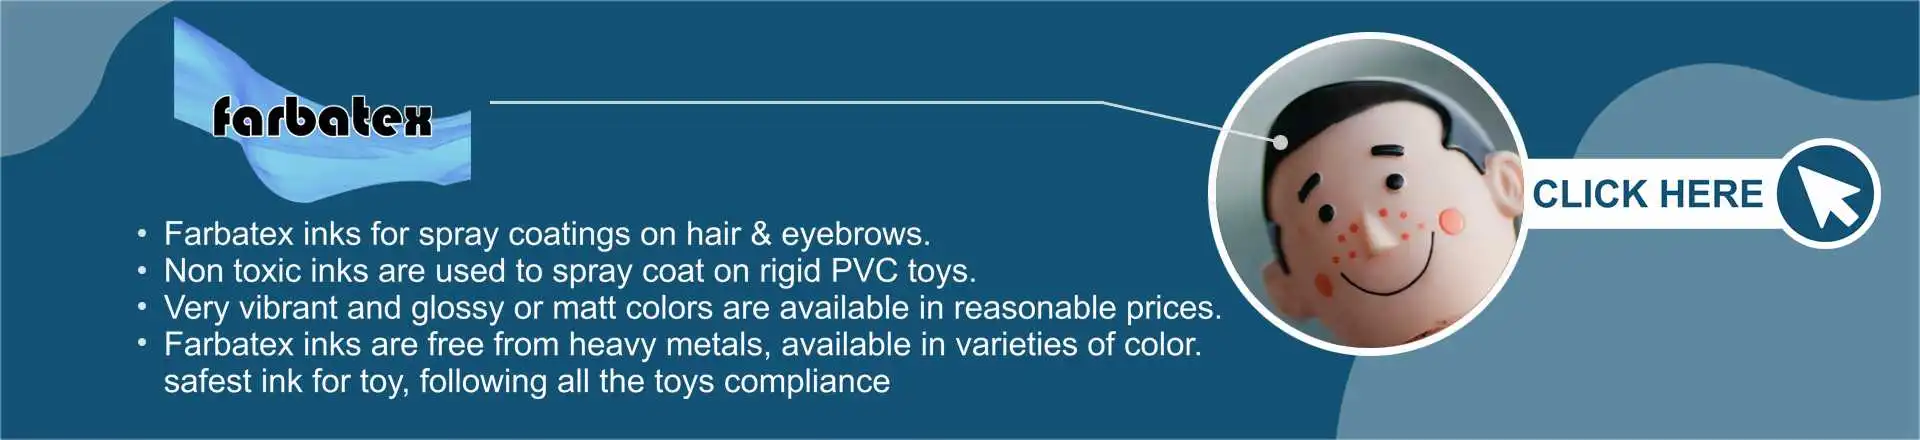 Farbatex inks for Spray coating on rigid PVC toys